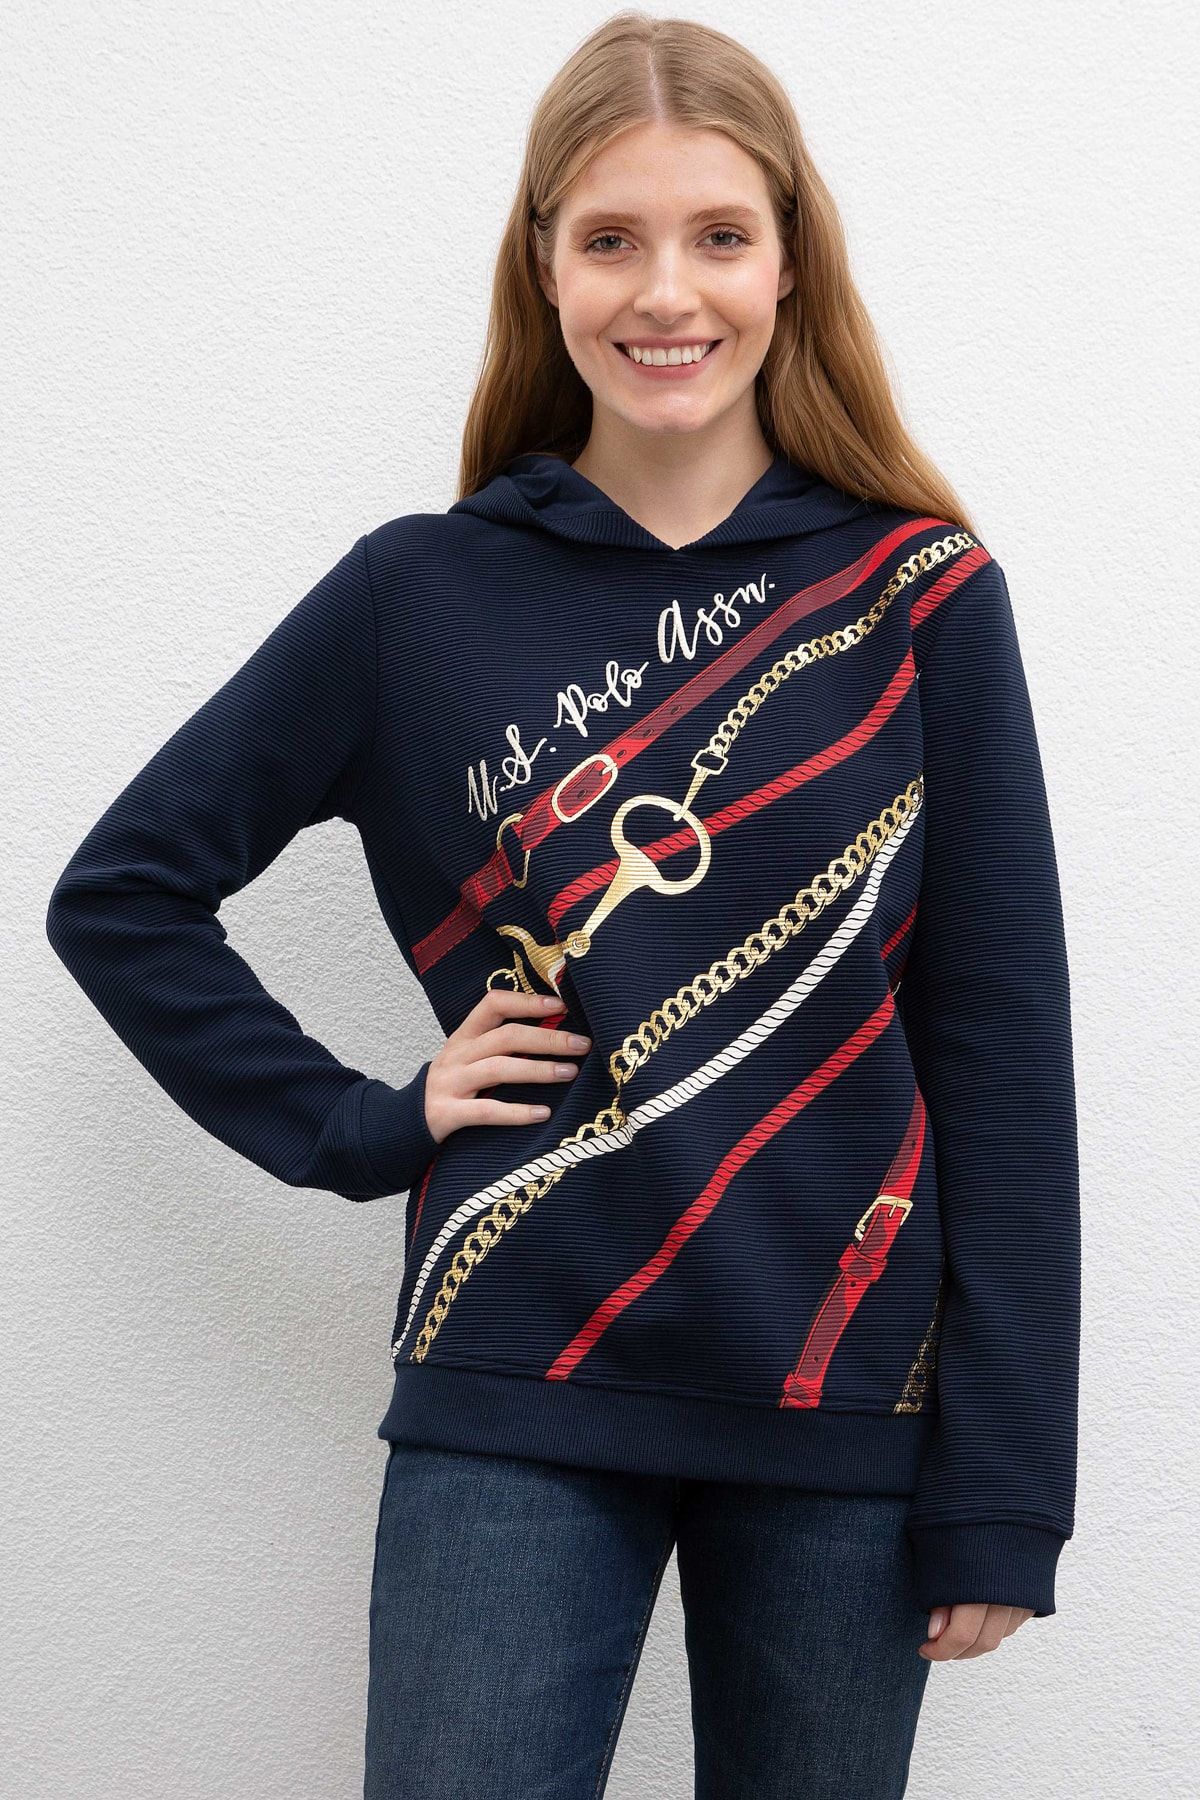 U.S. Polo Assn. Kadın Sweatshirt G082SZ082.000.940007